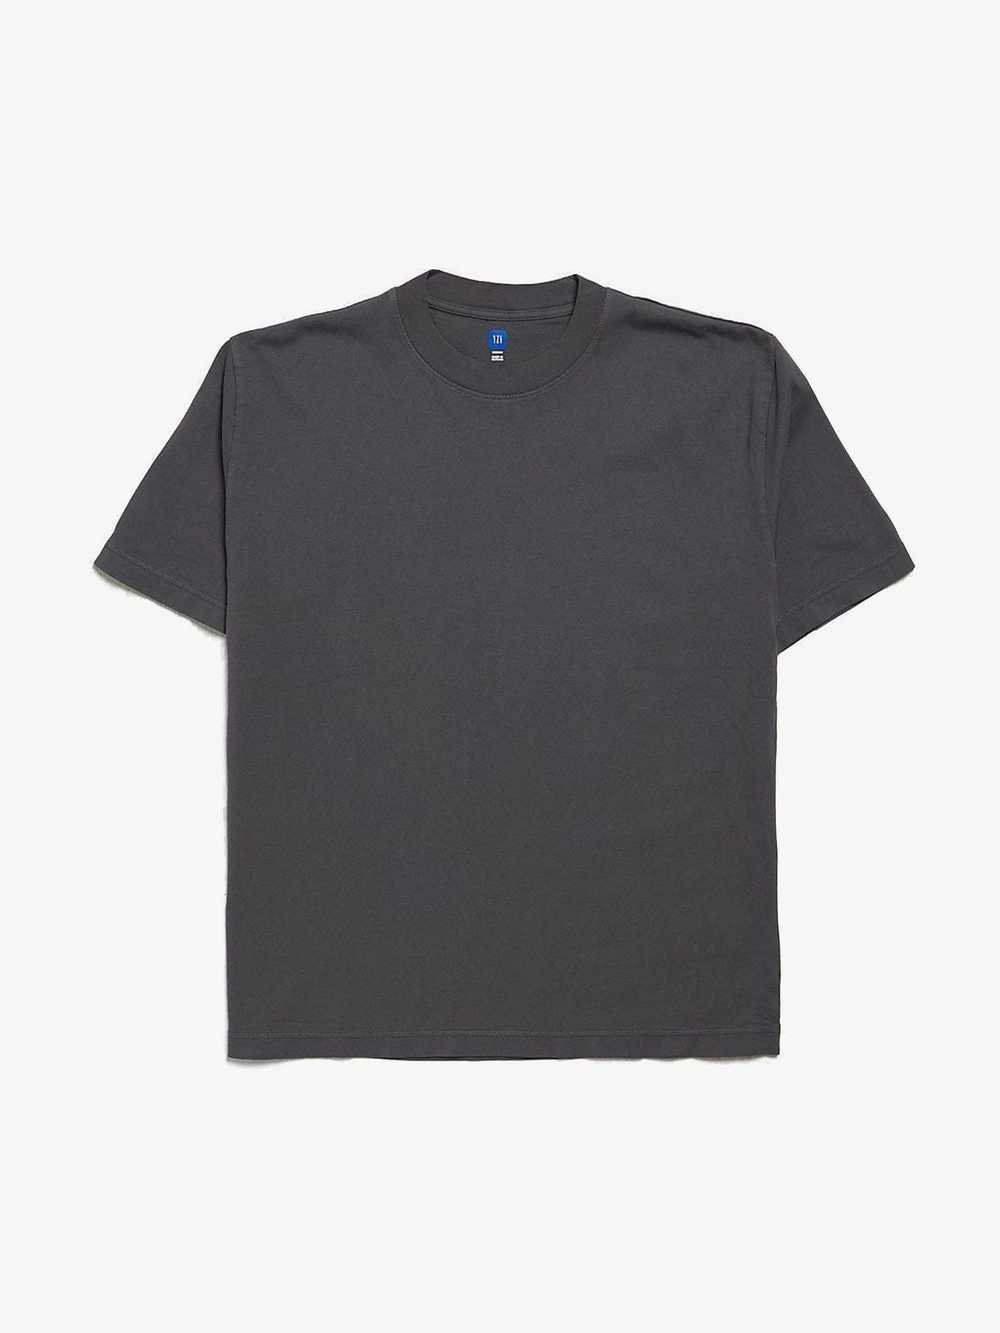 Yeezy Season Graphite Oversized T-Shirt - image 1